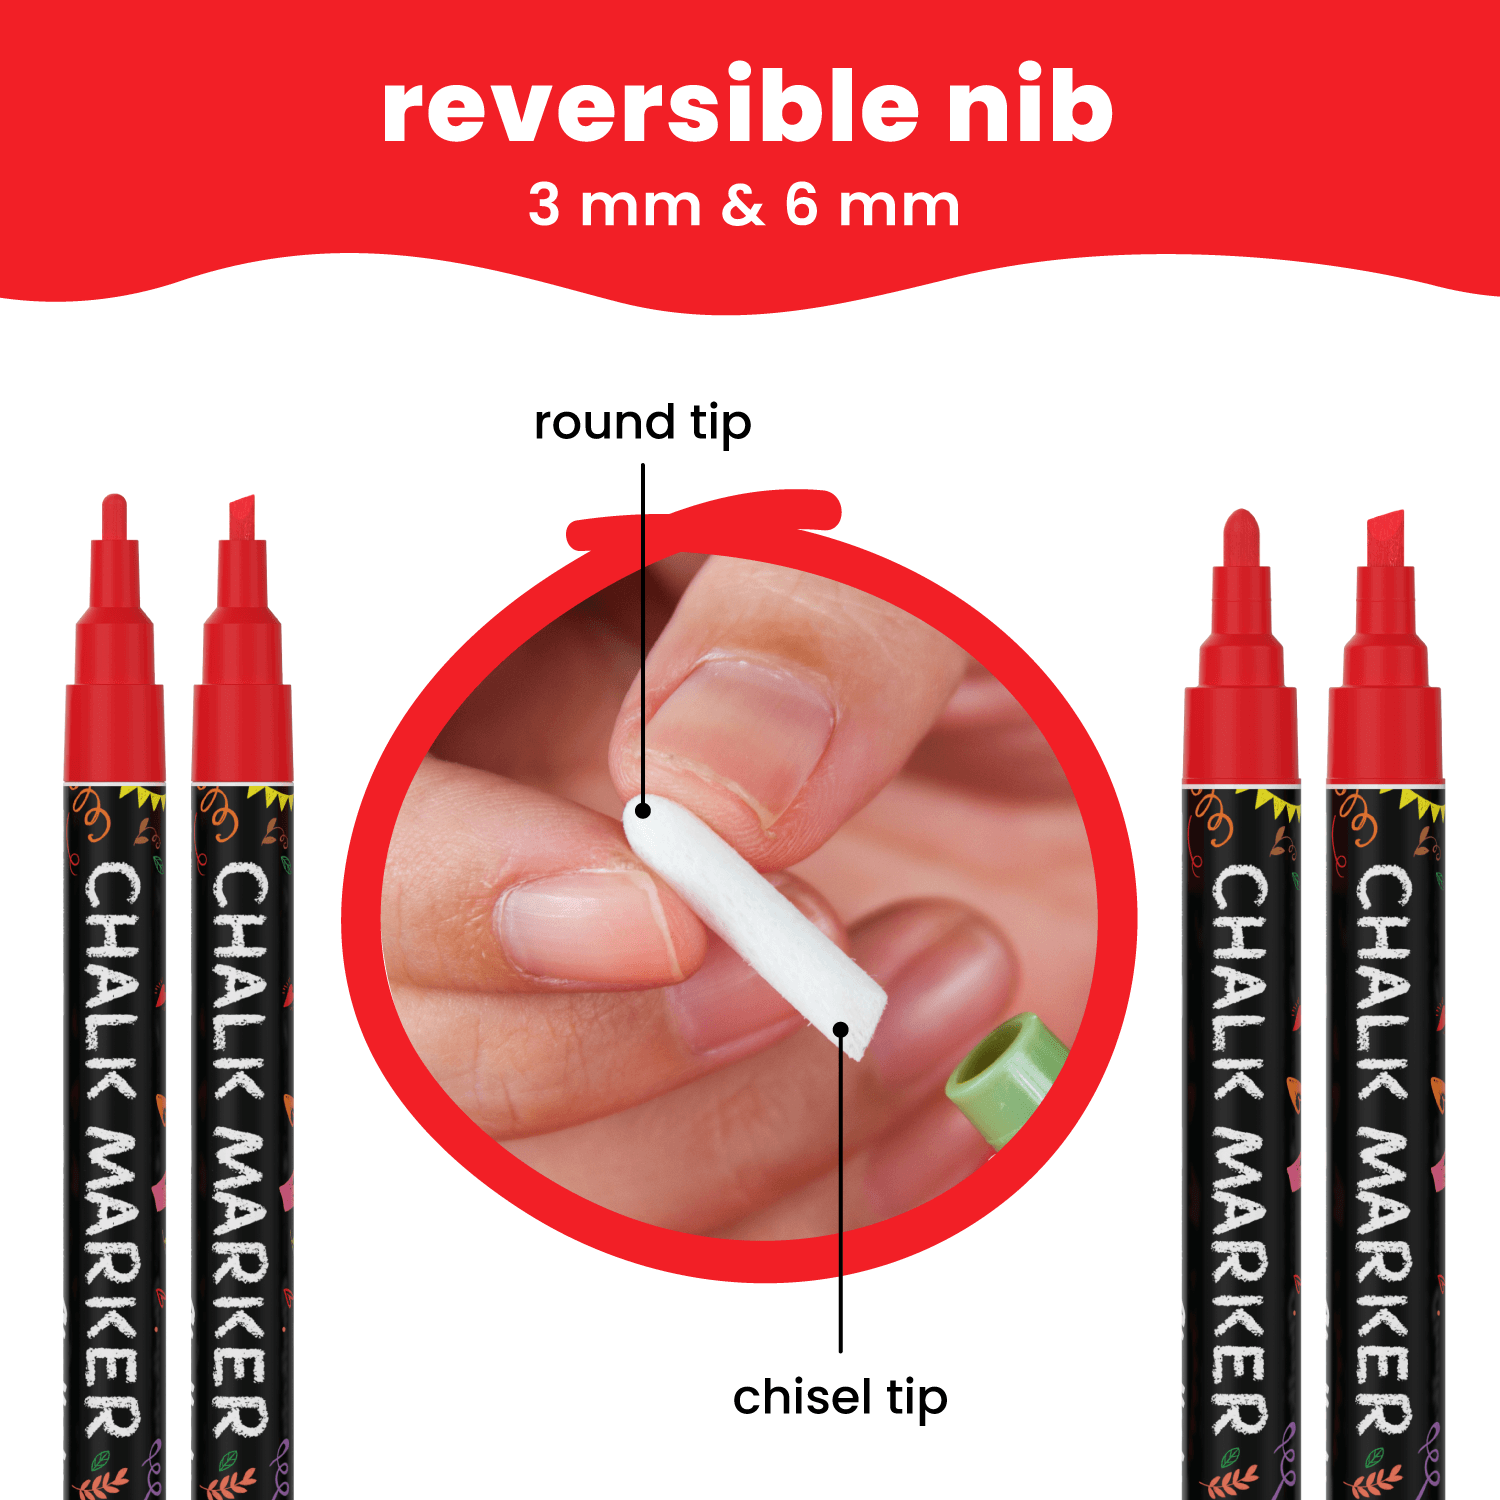 Correction Pen w/ Reversible Tip